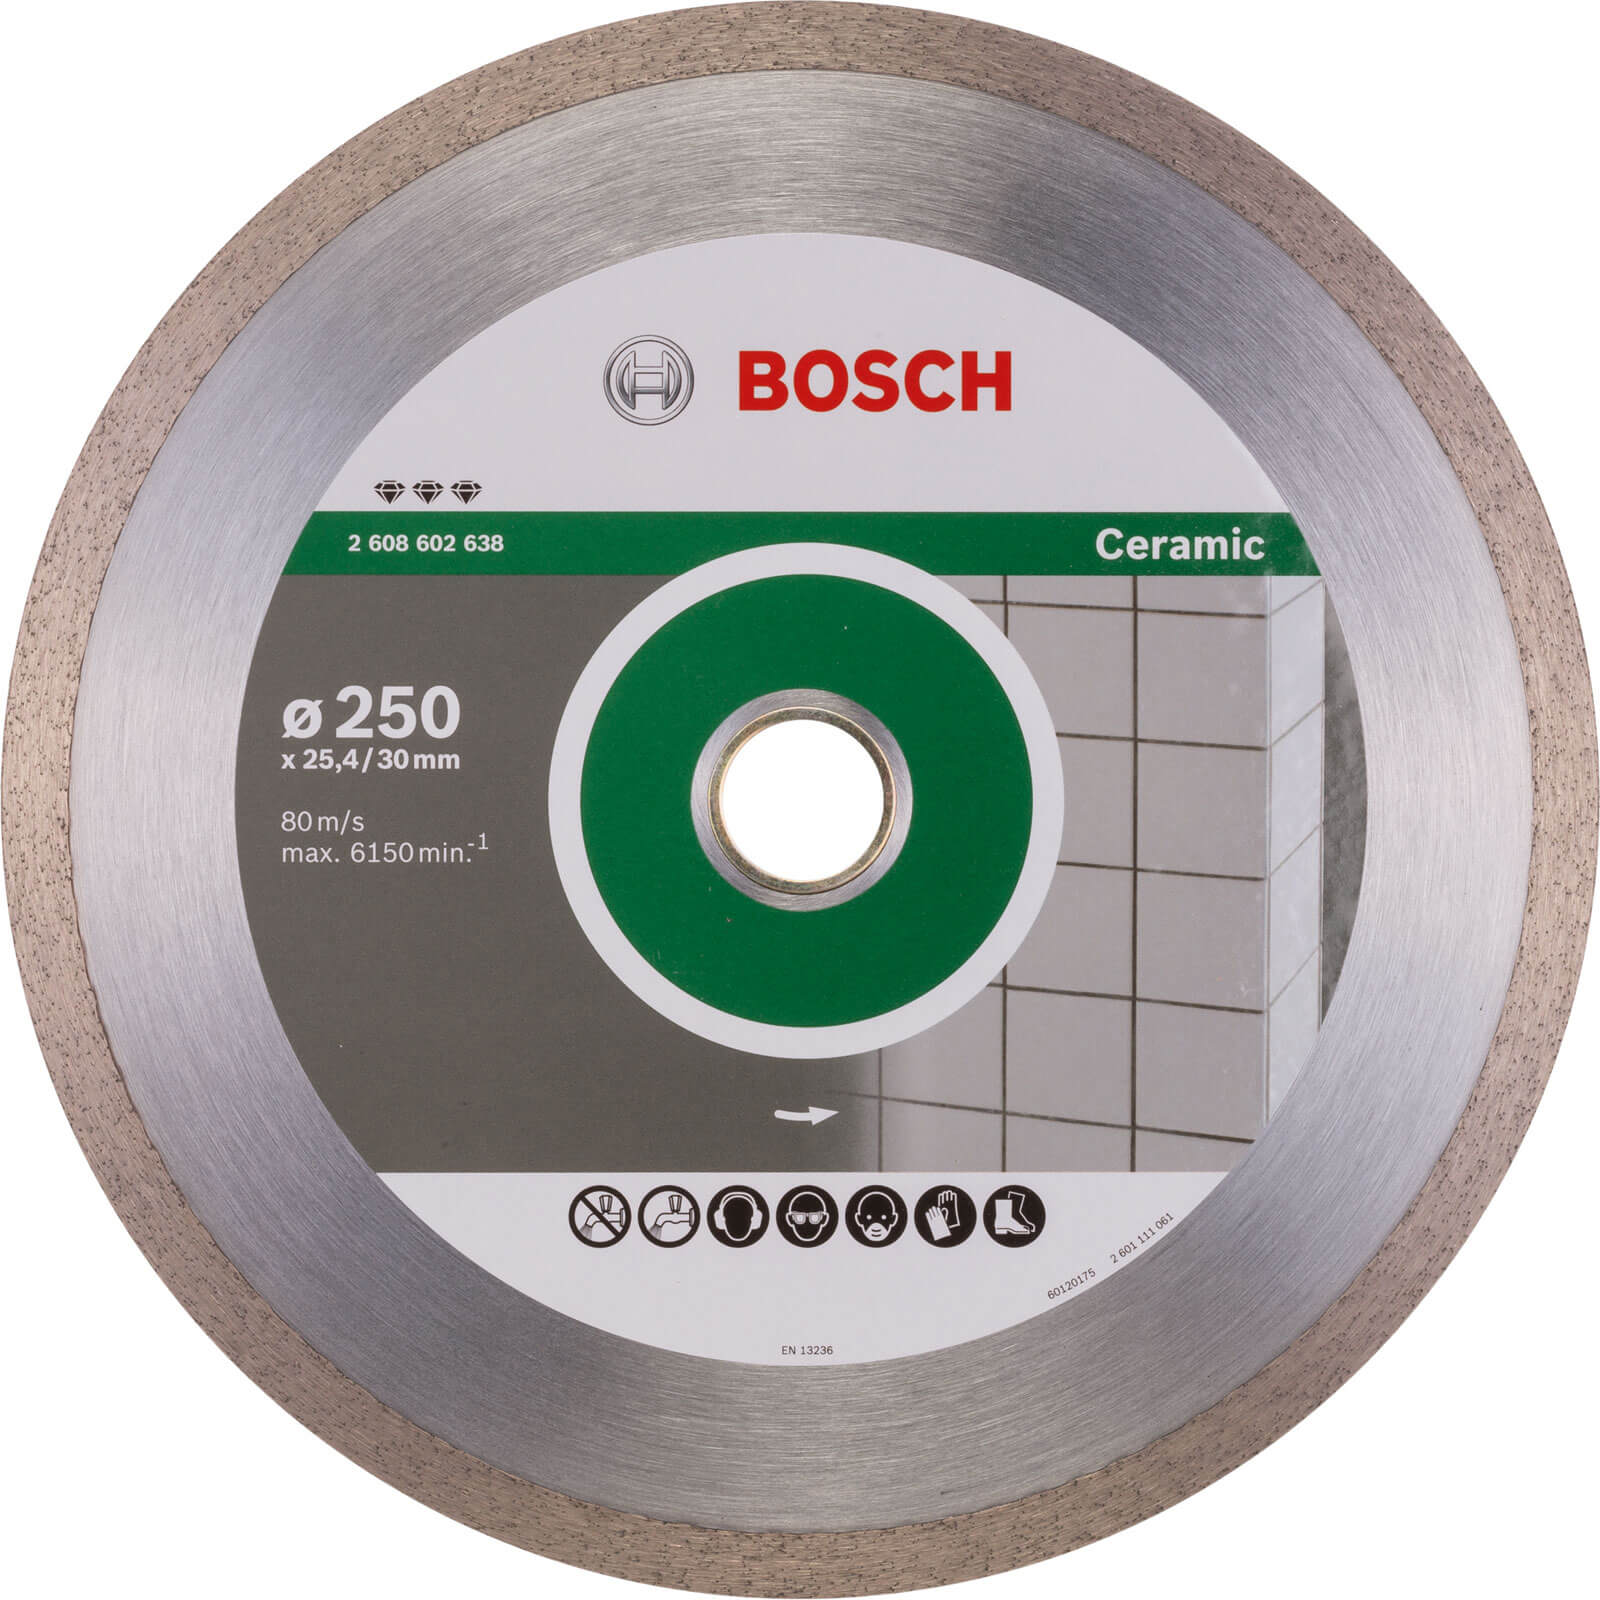 Photo of Bosch Ceramic Diamond Cutting Disc 250mm